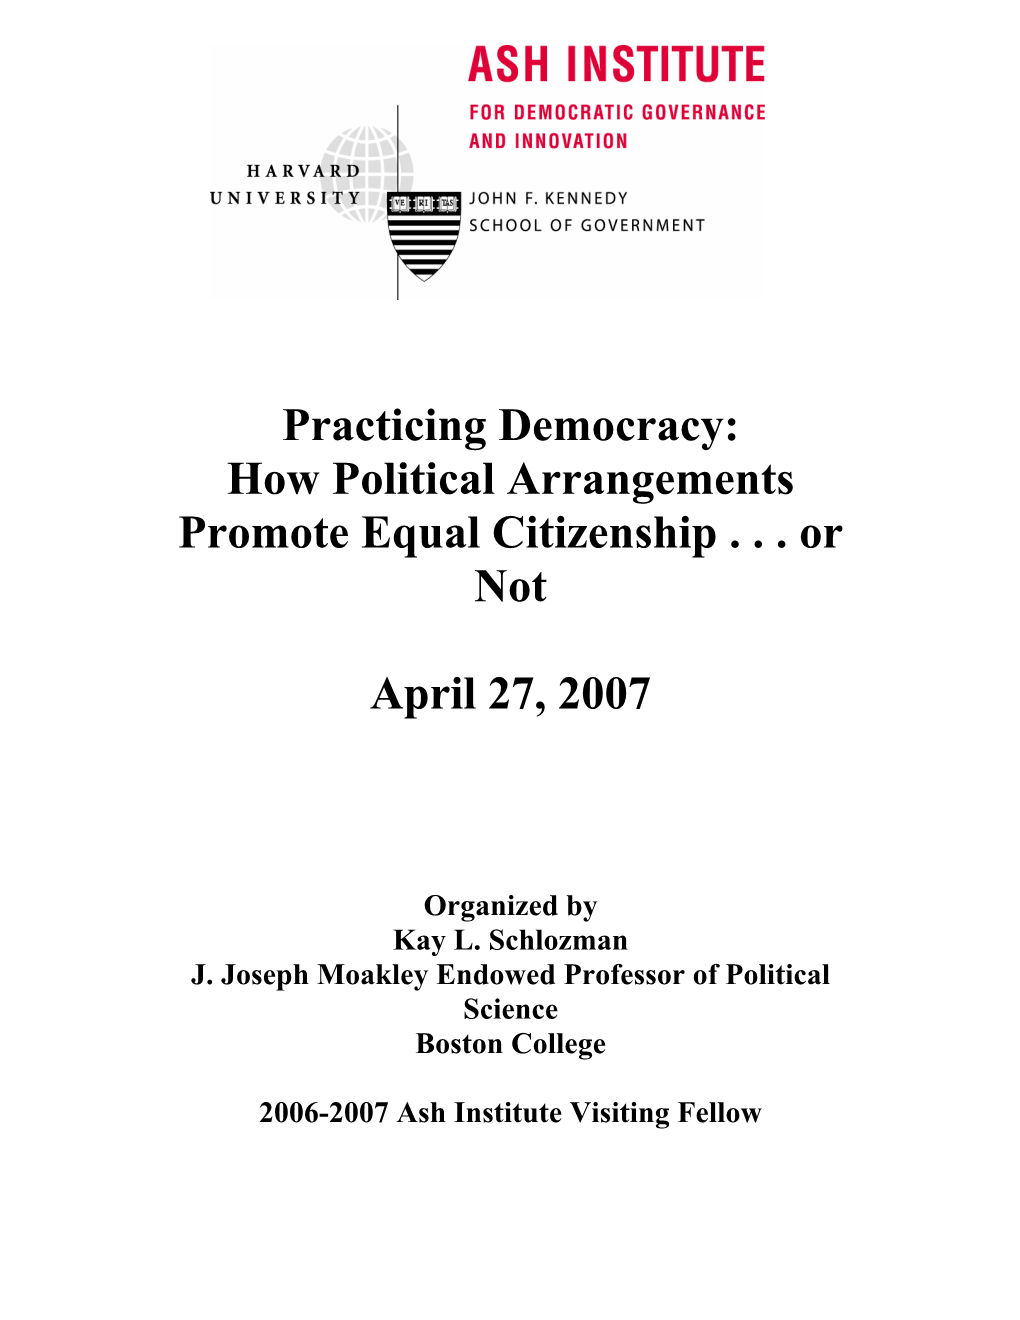 Practicing Democracy: How Political Arrangements Promote Equal Citizenship